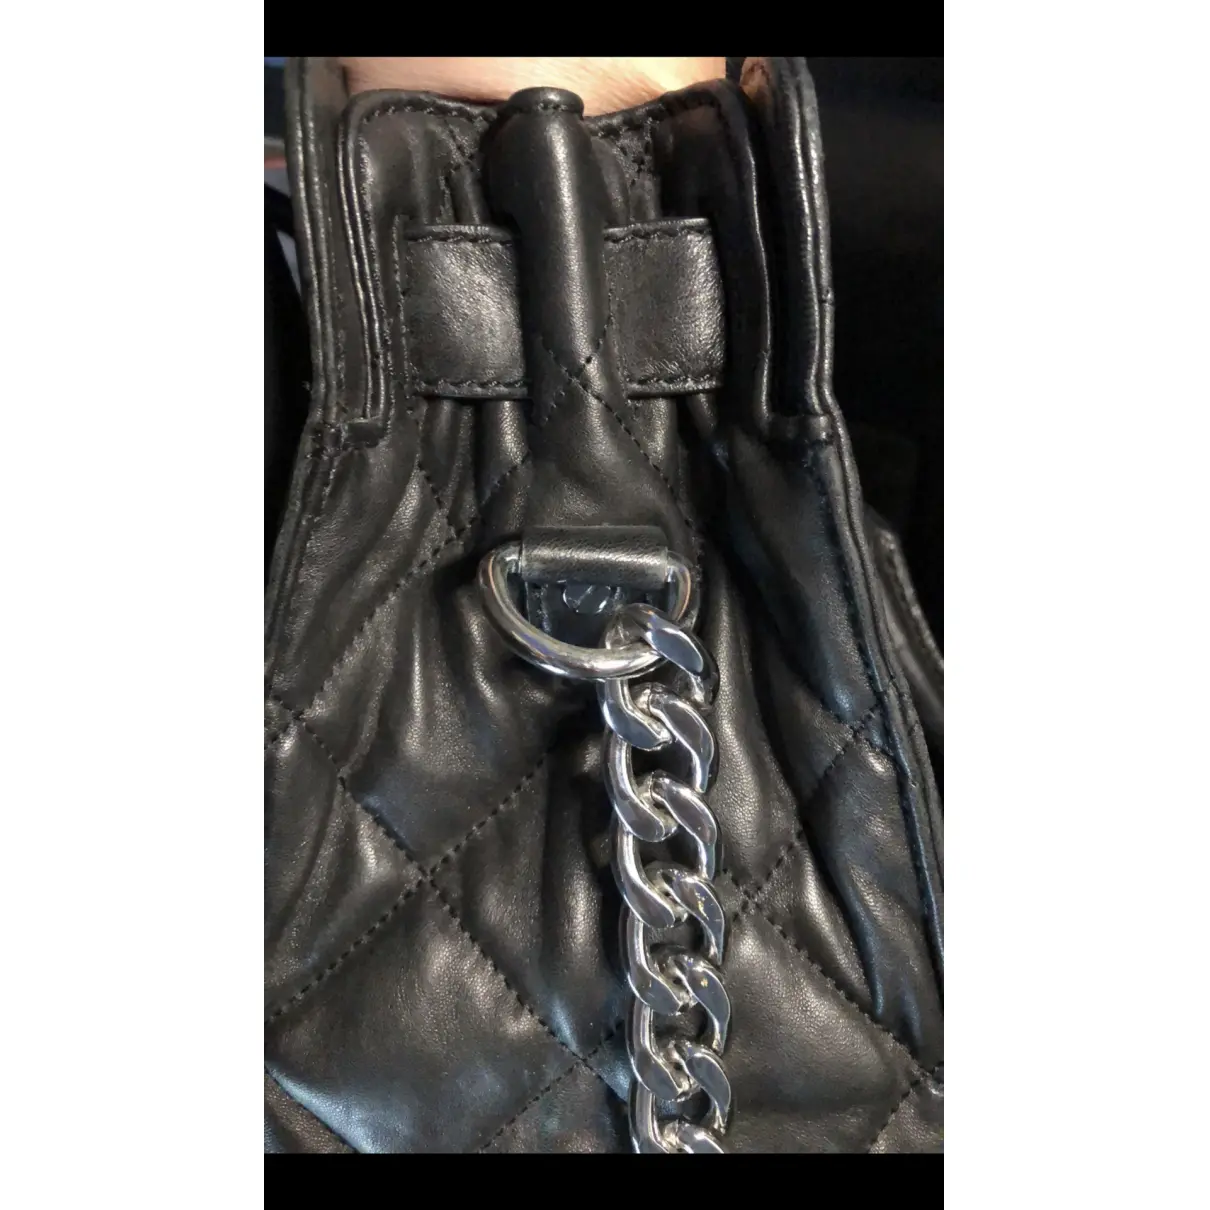 Hamilton leather satchel Michael Kors